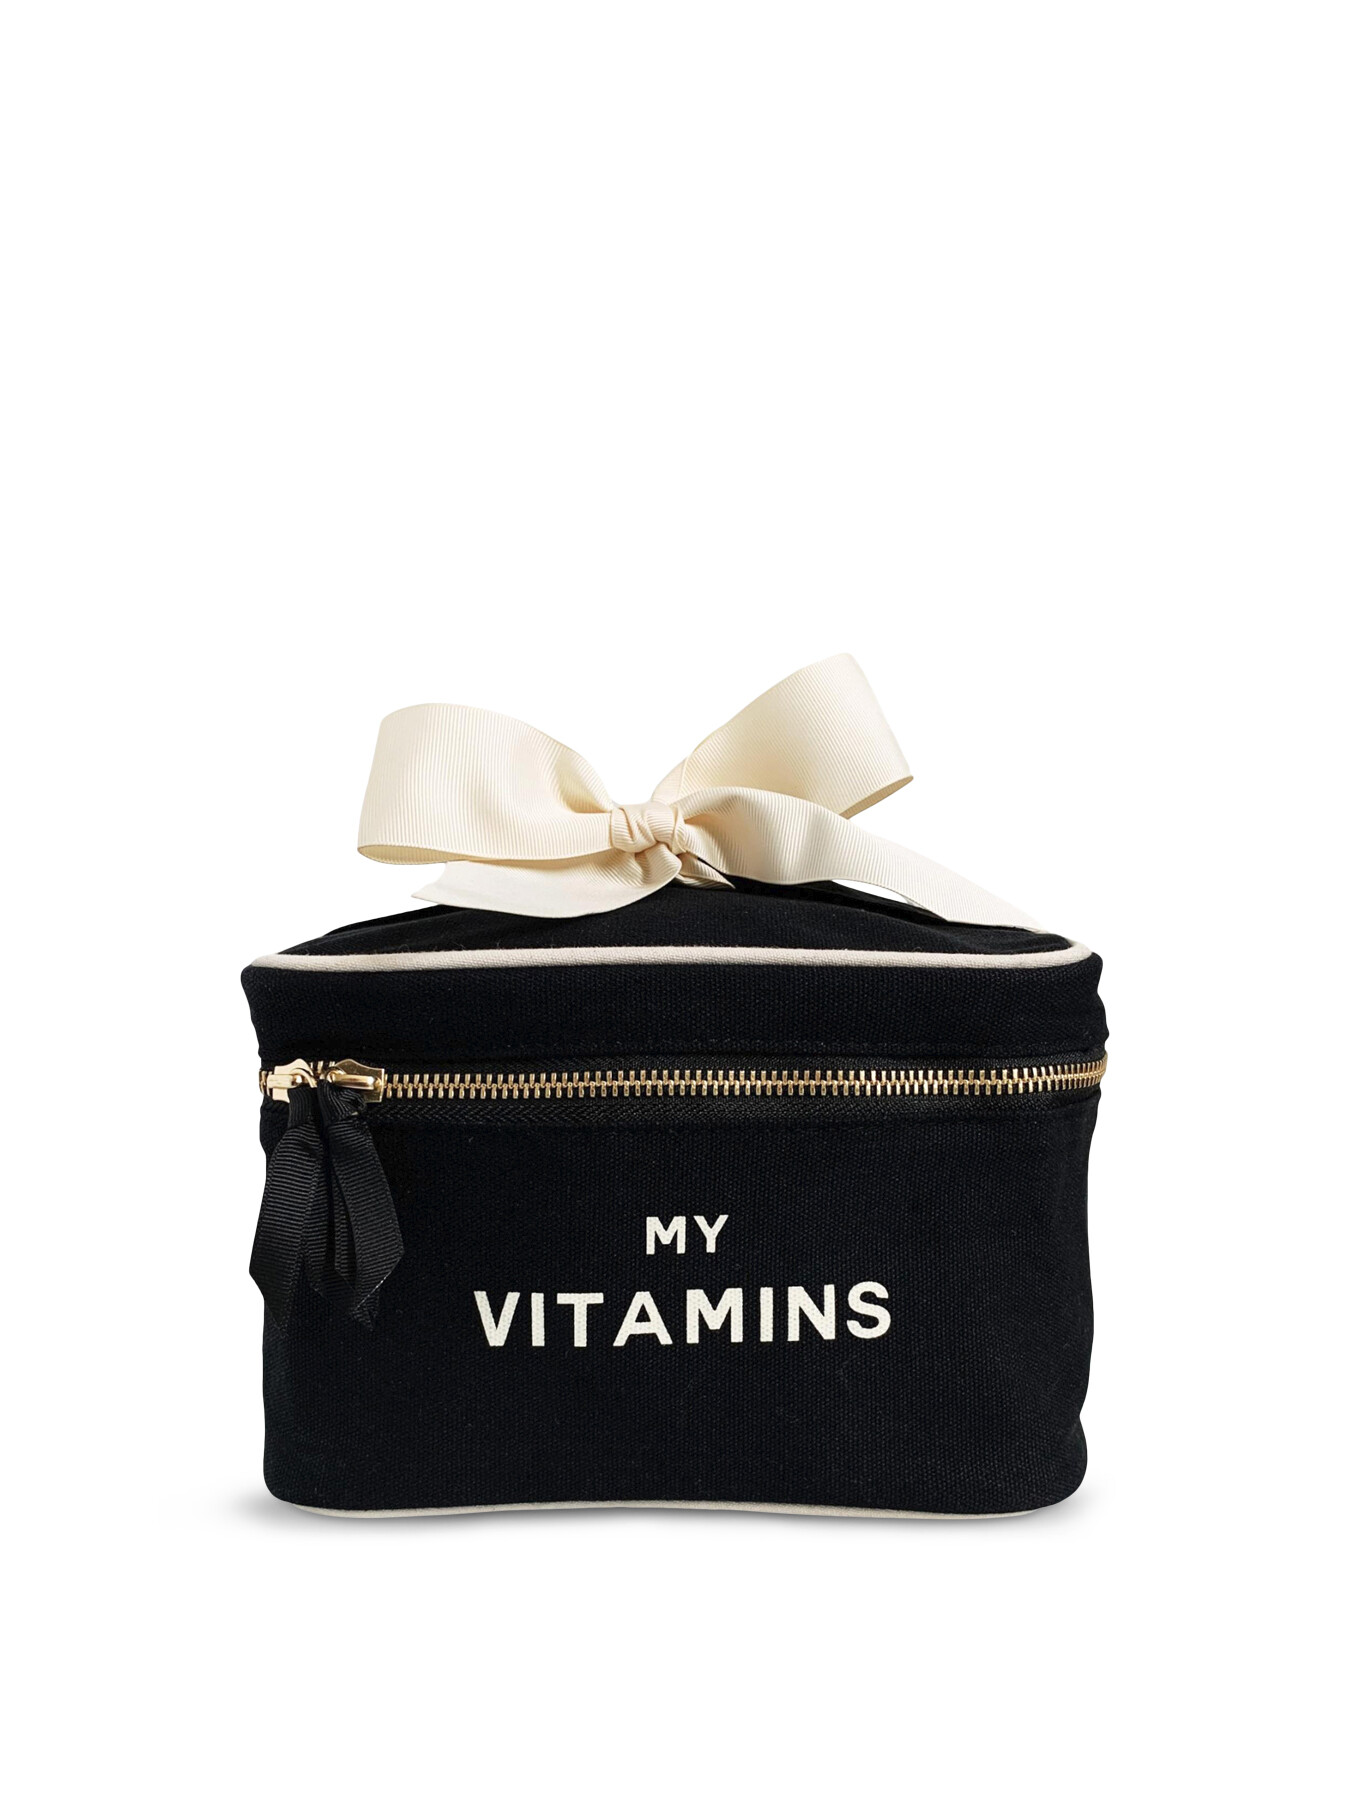 Bag-all Women's My Vitamins Pouch Black